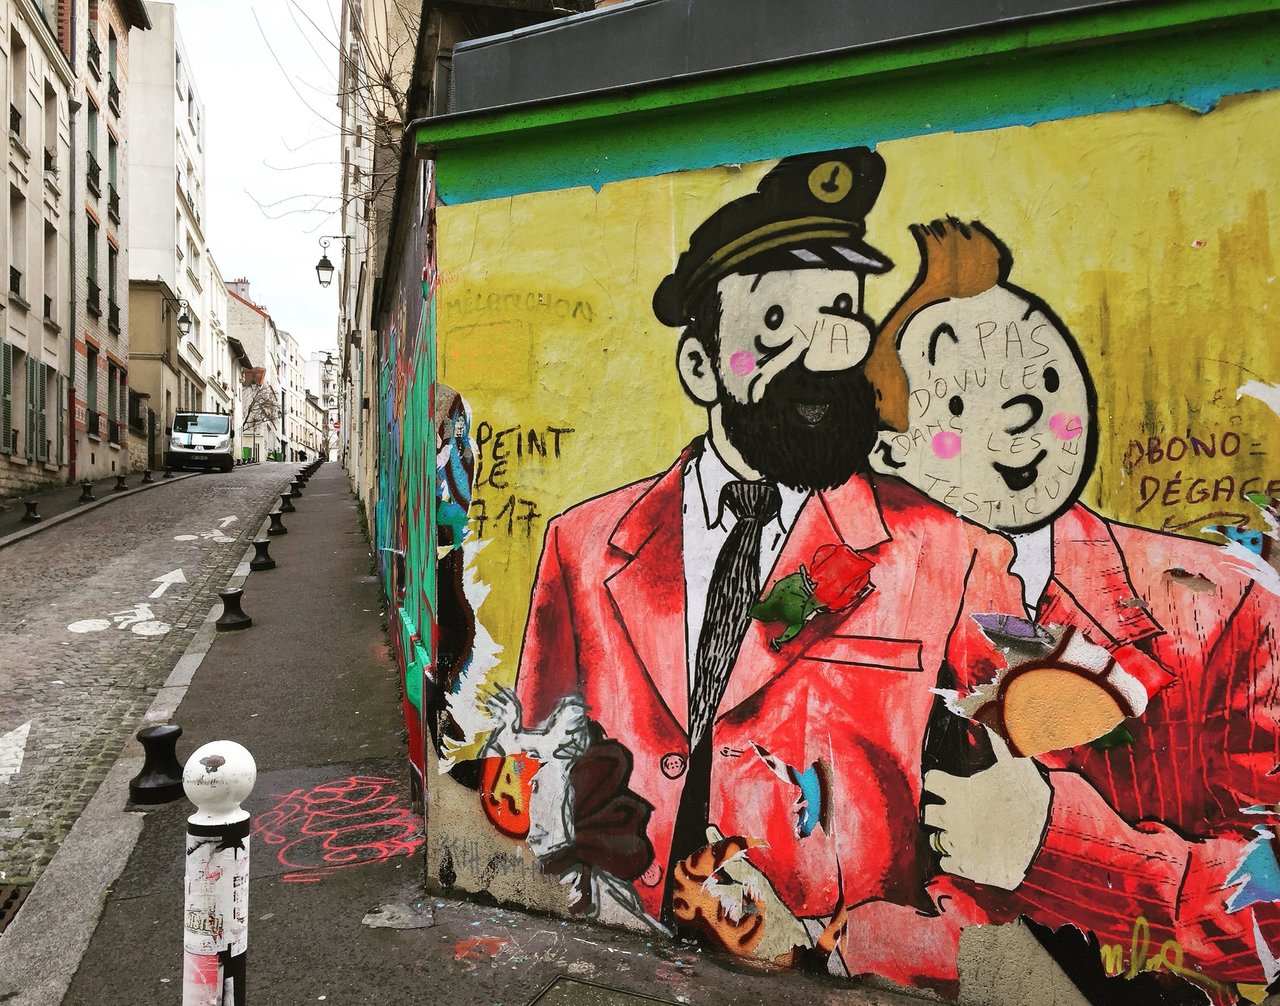 When love is just by your side ... by @Combo_Ck #combock #culturekidnapper #tintin #haddock #moulinsart #streetart #graffitiart #graffiti #Spray #urbanart #pochoir #collage #nirindastreet https://t.co/Qk9S4oxCK2